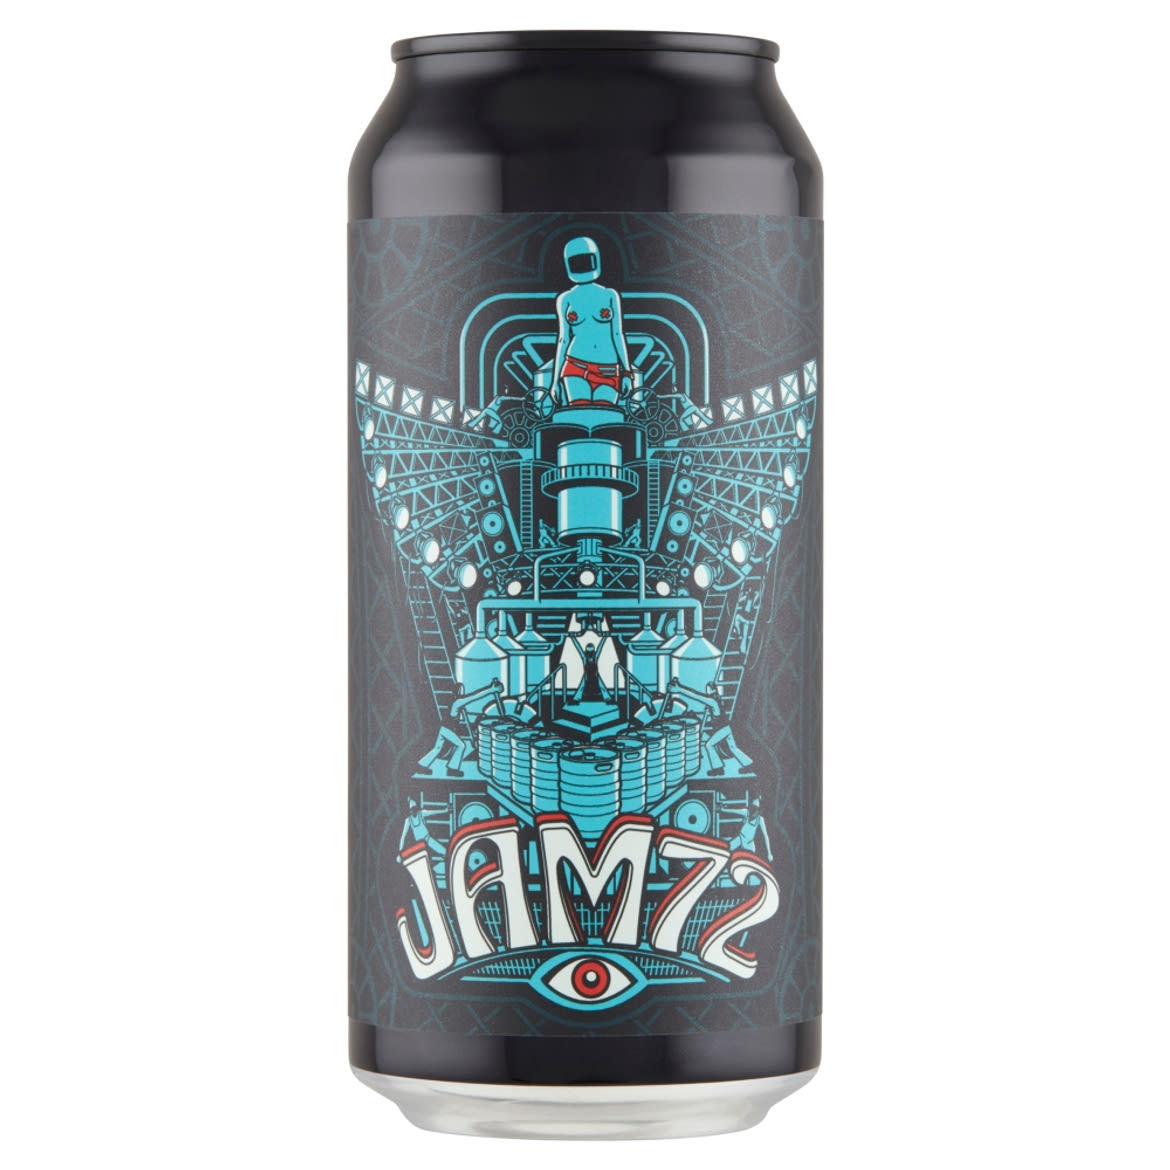 Mad Scientist Jam72 szűretlen IPA sör 7,2%